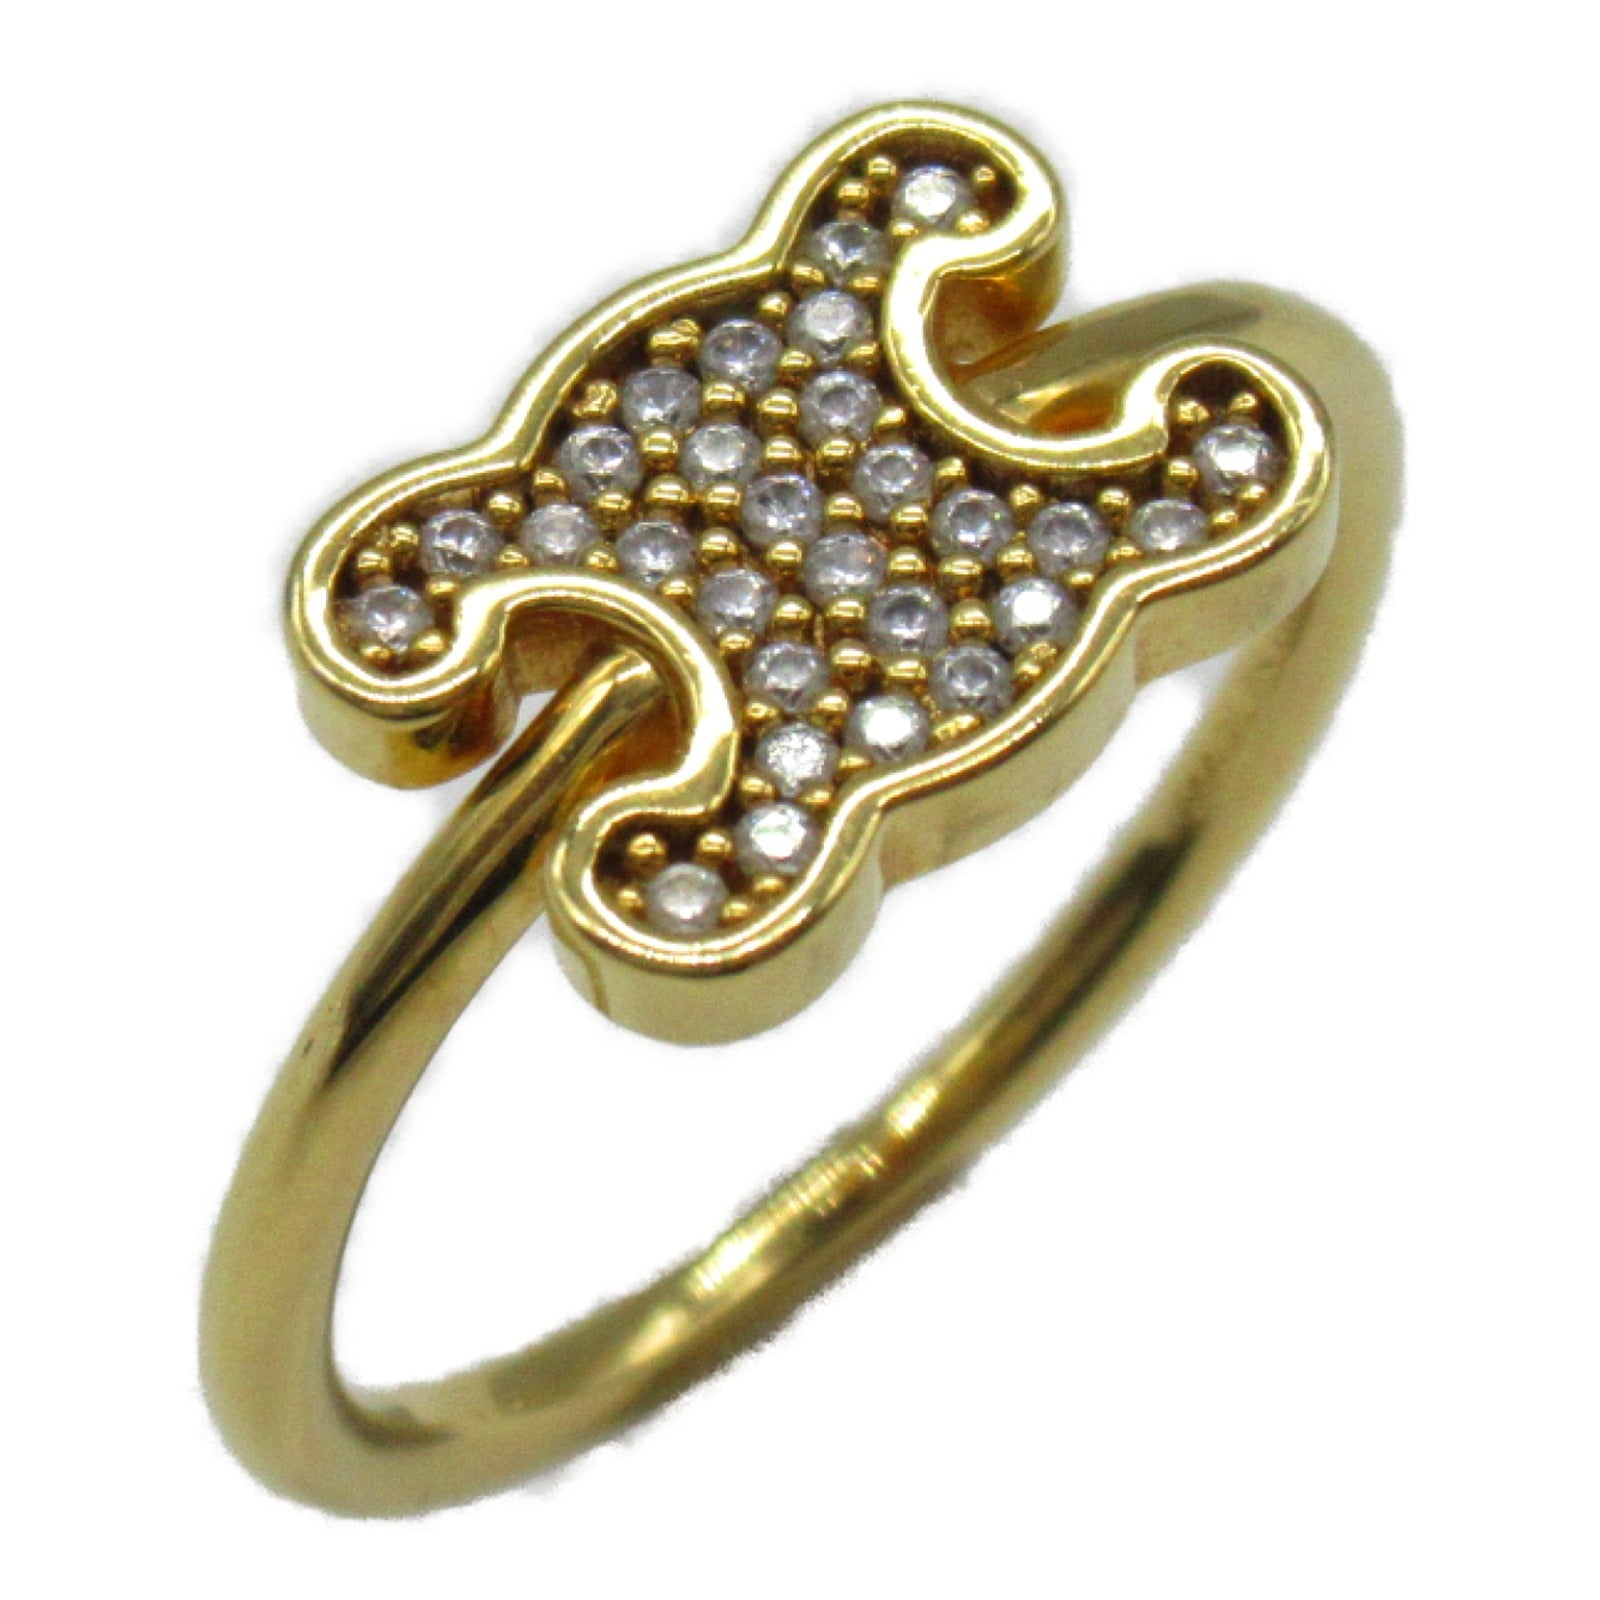 Seline Celine Triumphsmoor Ring Ring Ring Jewelry GP (Gen )  Gold  460MZ6BCZ.35OR